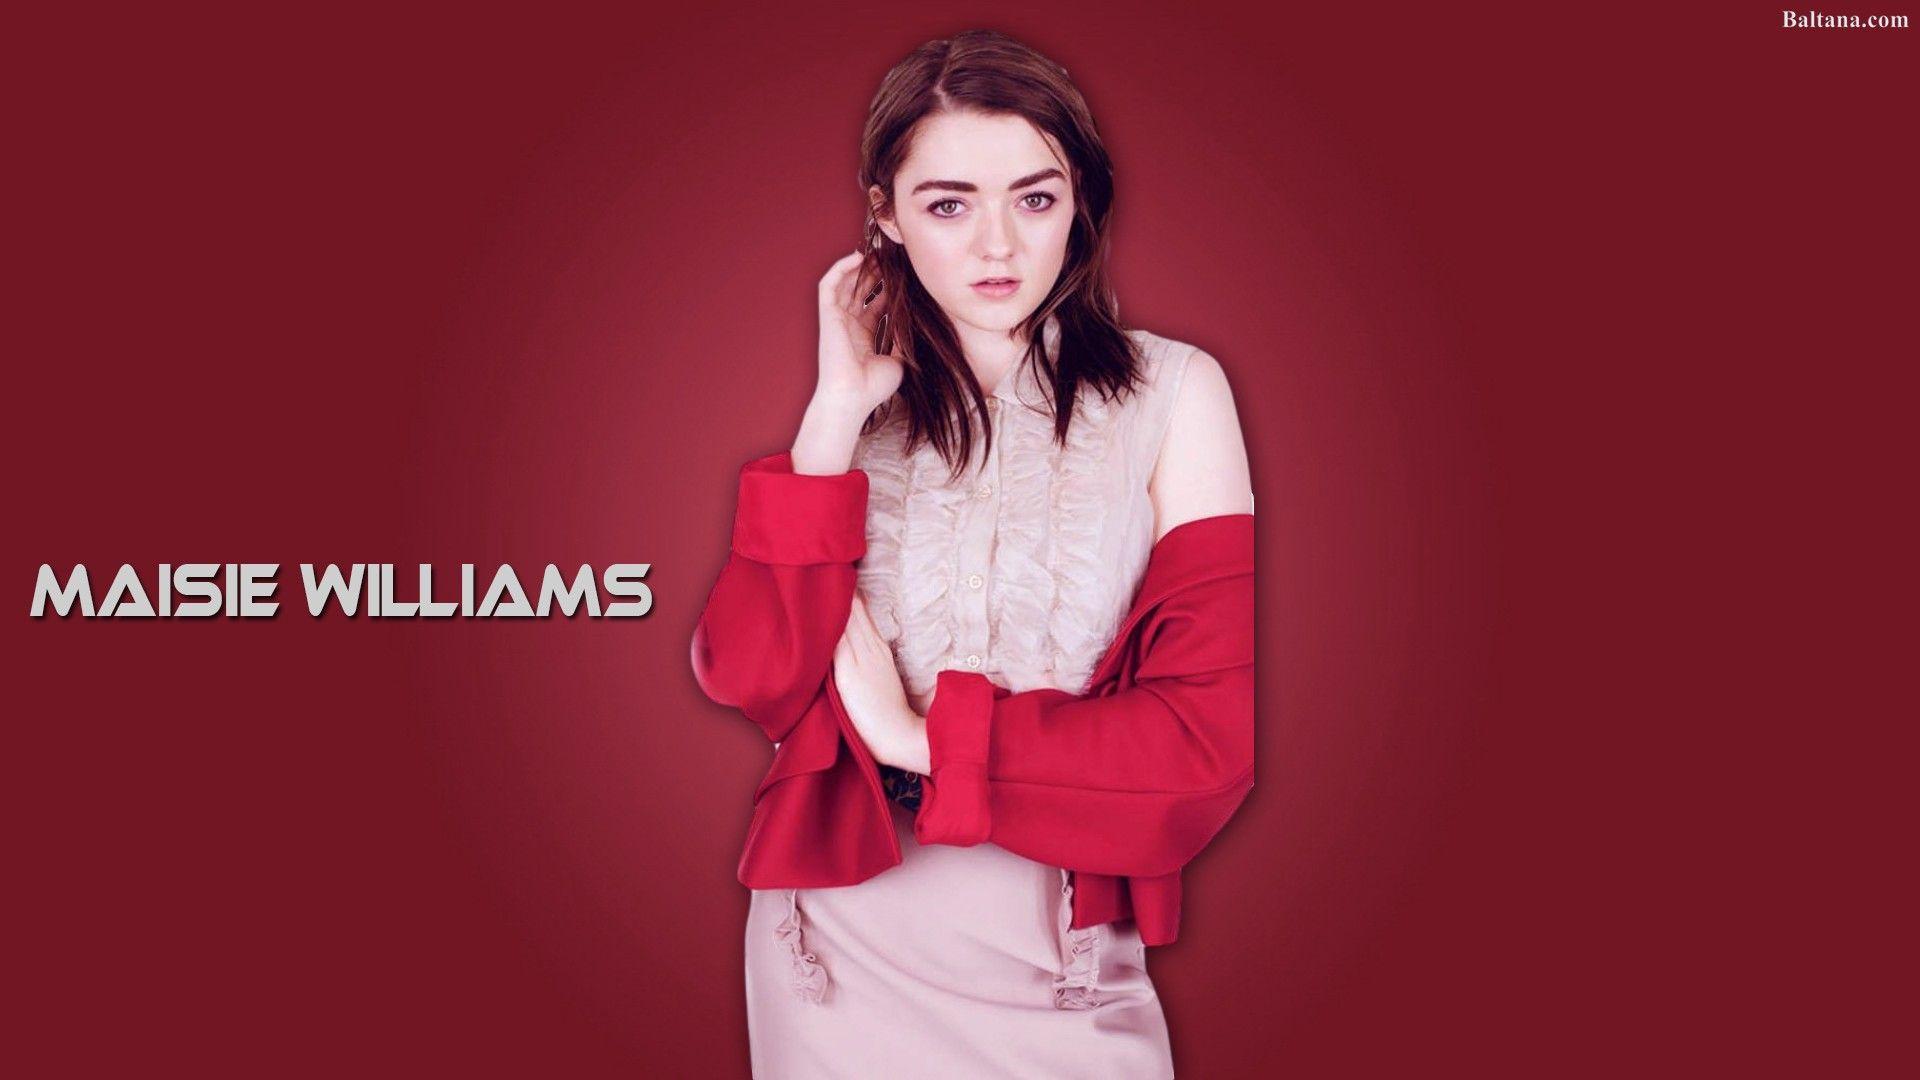 Maisie Williams Wallpaper HD Background, Image, Pics, Photo Free